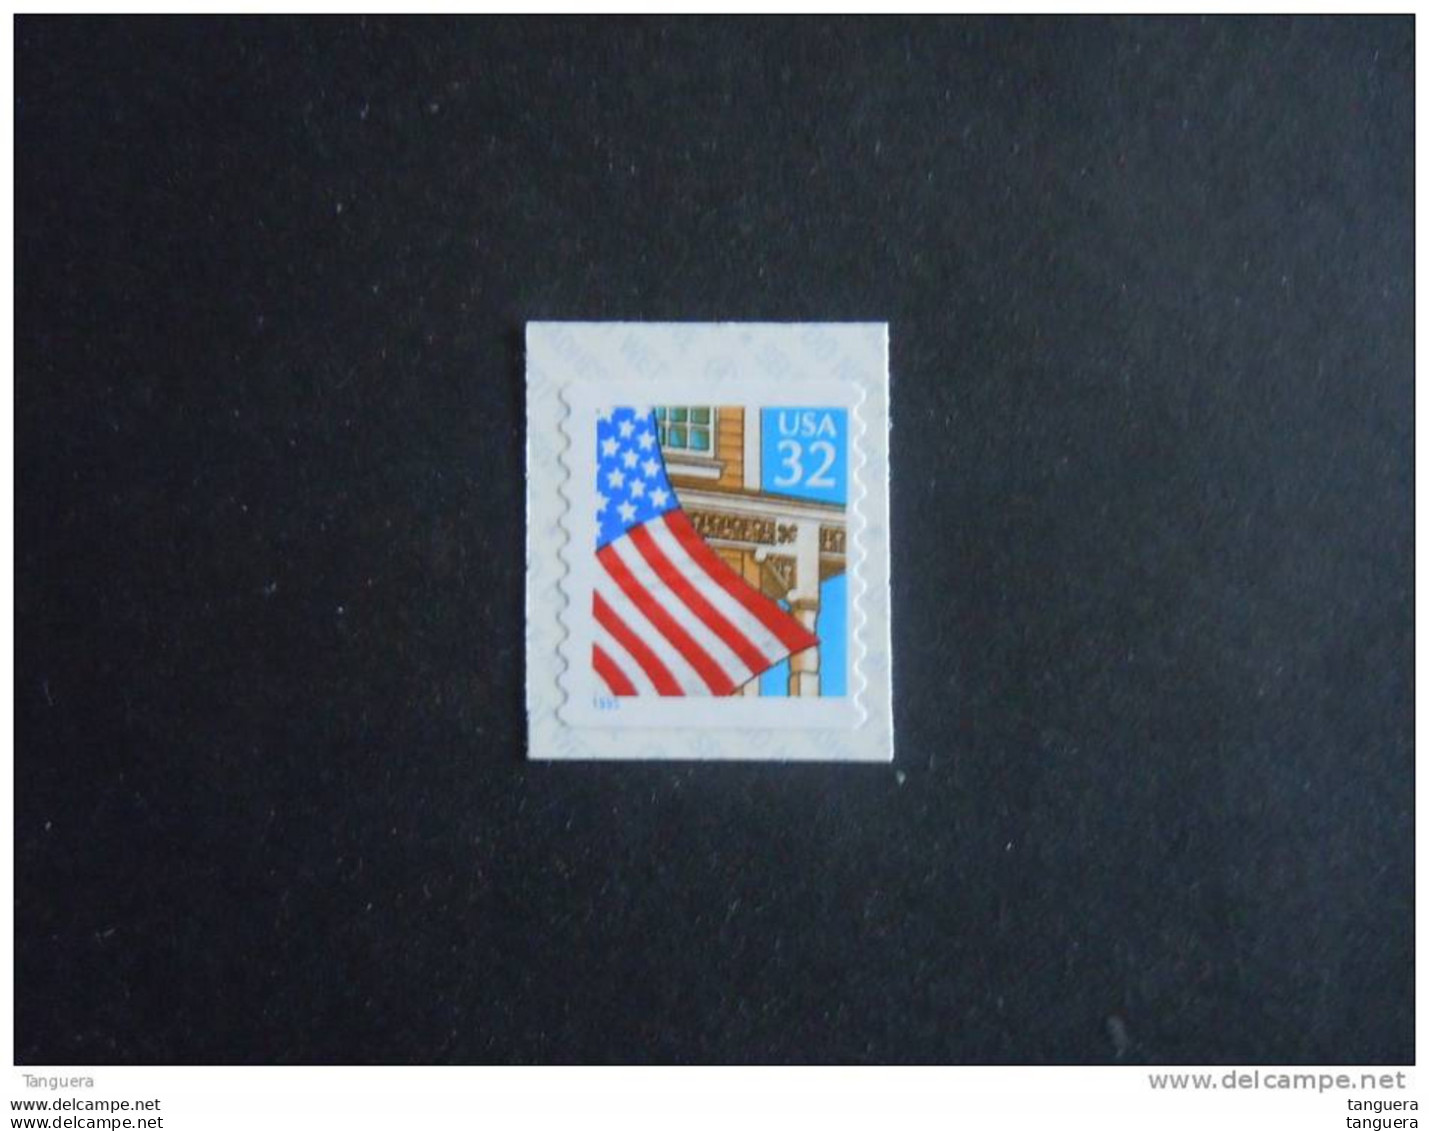 USA Etats-Unis D'Amerique United States 1995 Flag Over Porch Yv 2339 MNH ** - Ruedecillas